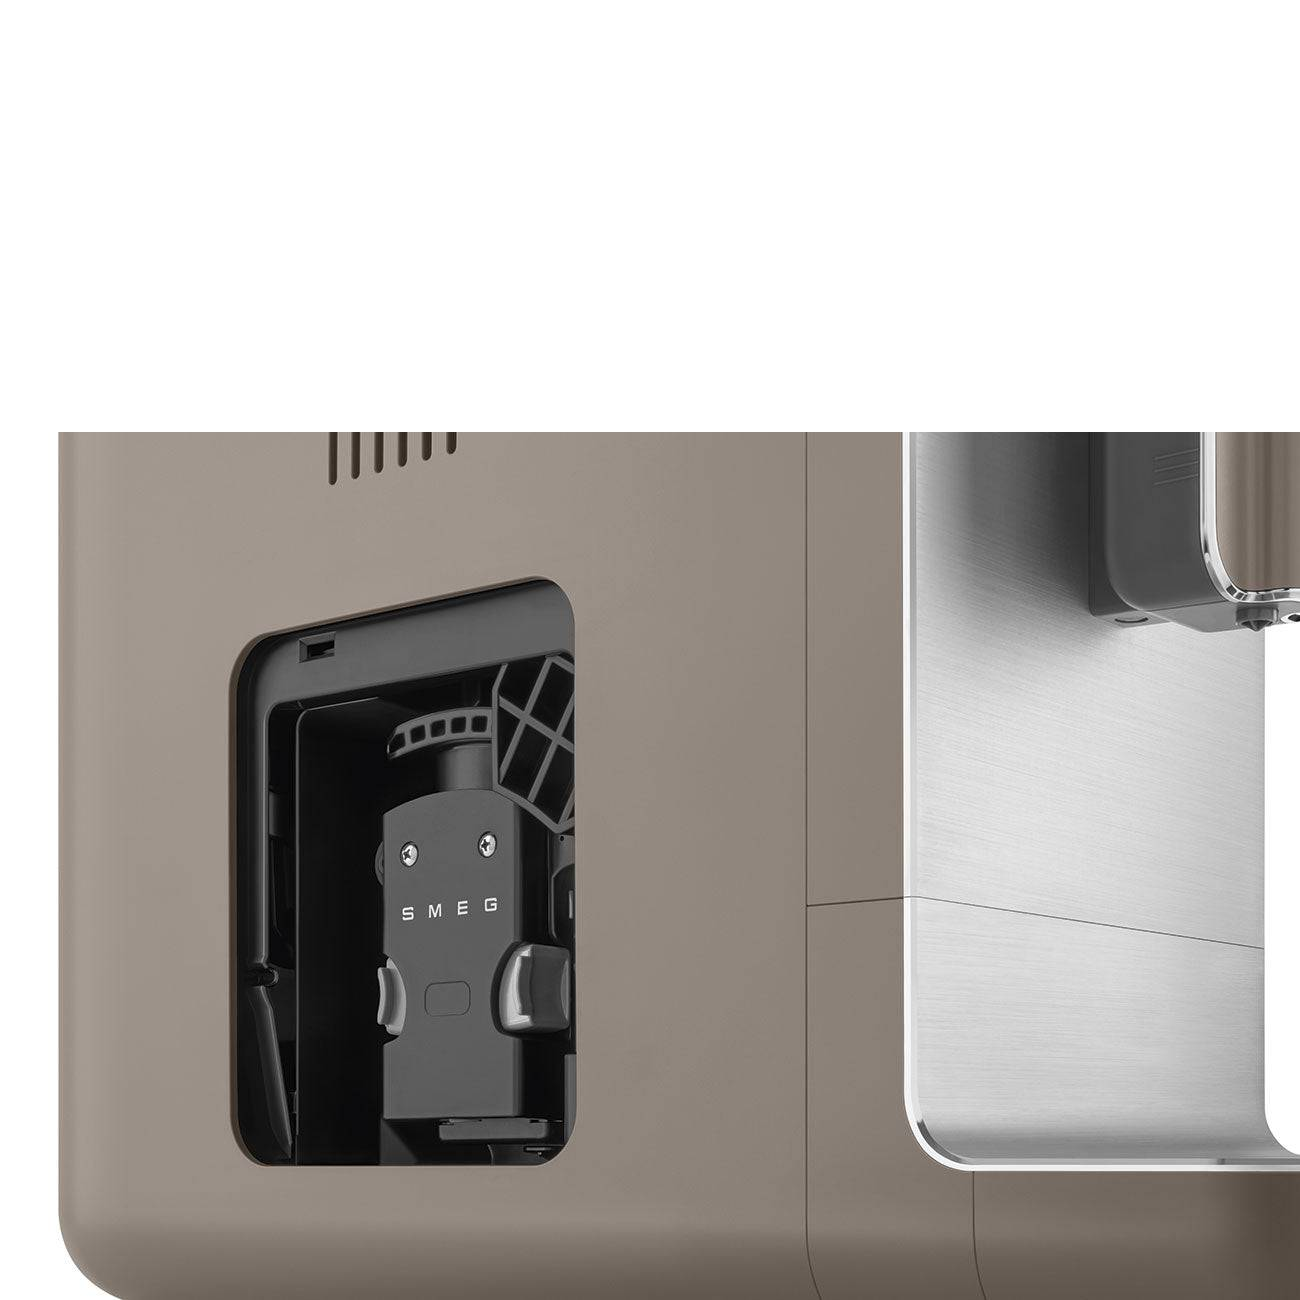 SMEG Smeg BCC02TPMEU Kaffeevollautomat mit Artikel|Stock|Taupe Kleingeräte bcc02|Kaffee|Kaffeevollautomat|Kleingerät|Meistgesuchte Taupe Dampffunktion